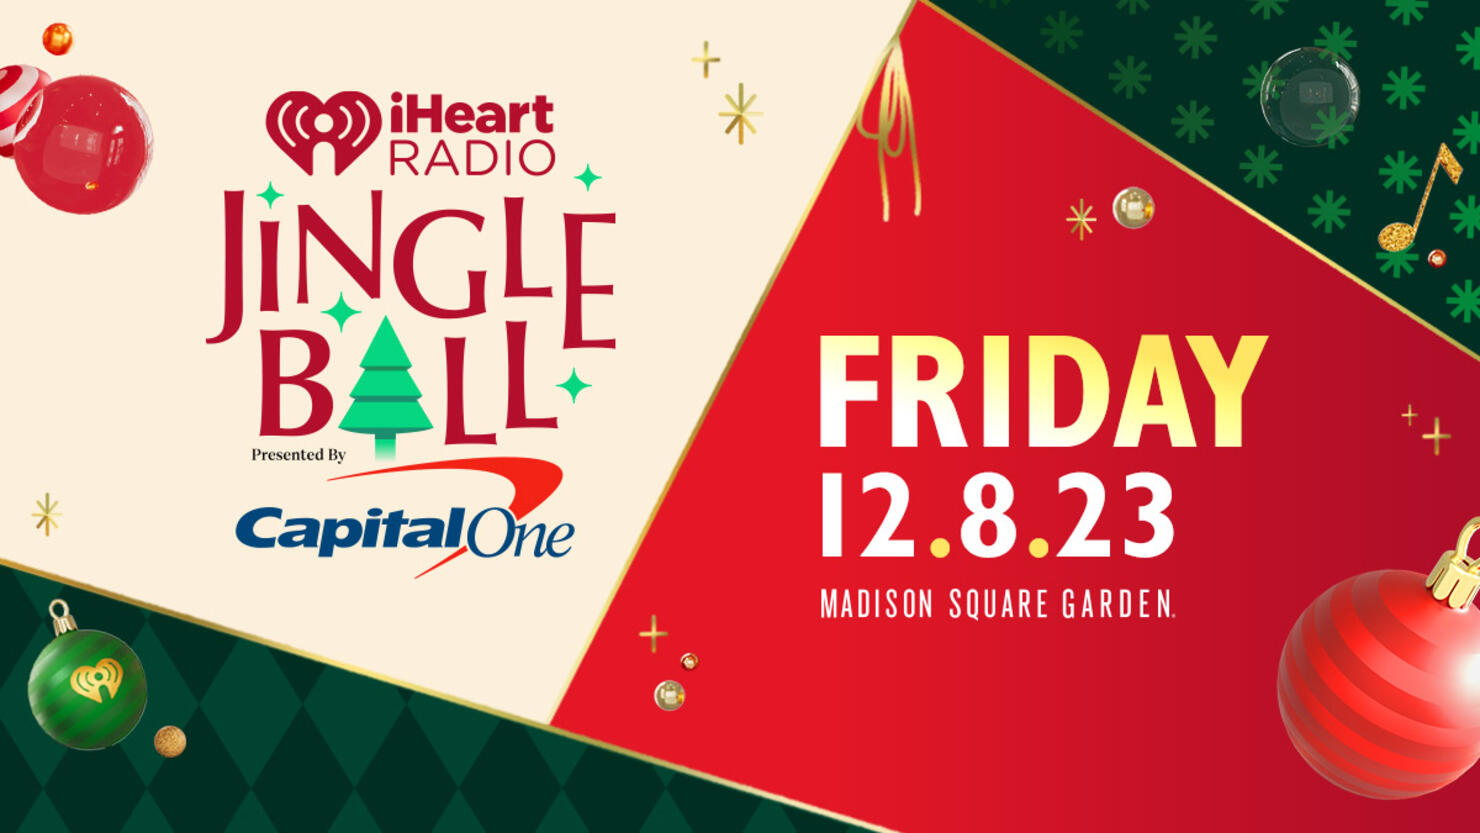 iHeartRadio Jingle Ball Tour presented by Capital One